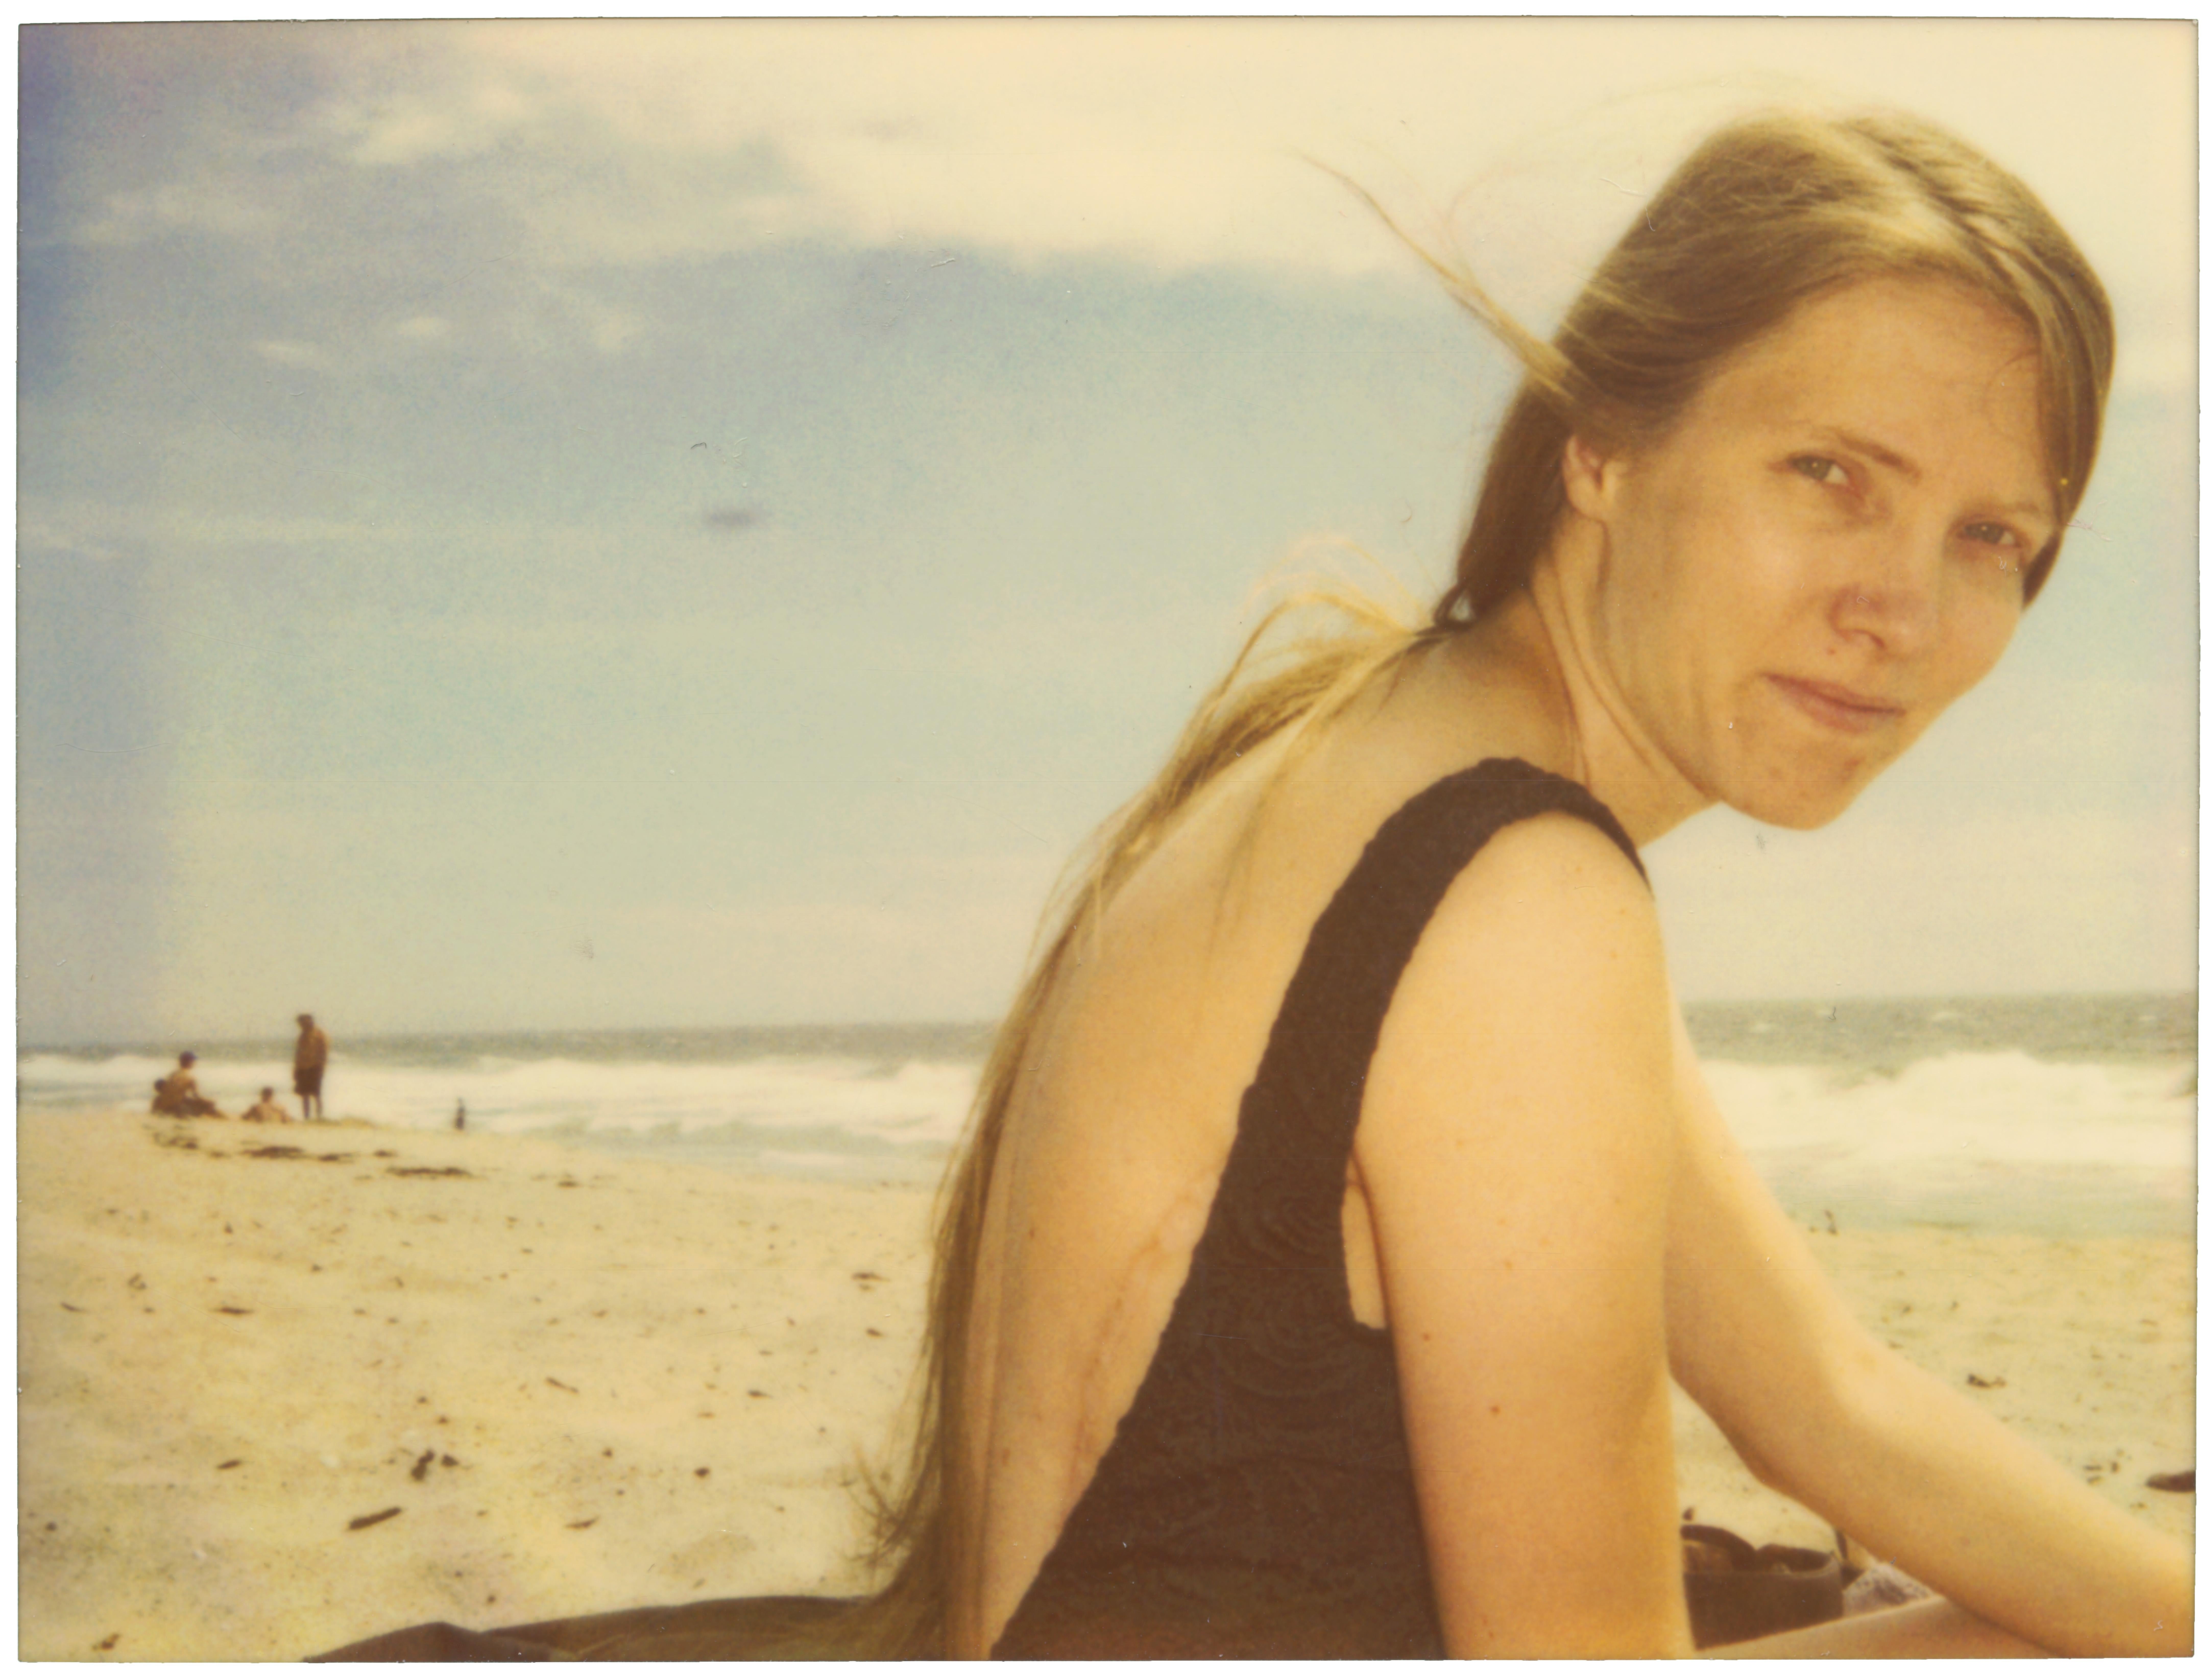 Stefanie Schneider Portrait Photograph - Zuma Beach (Stranger than Paradise) - 21st Century, Polaroid, Color